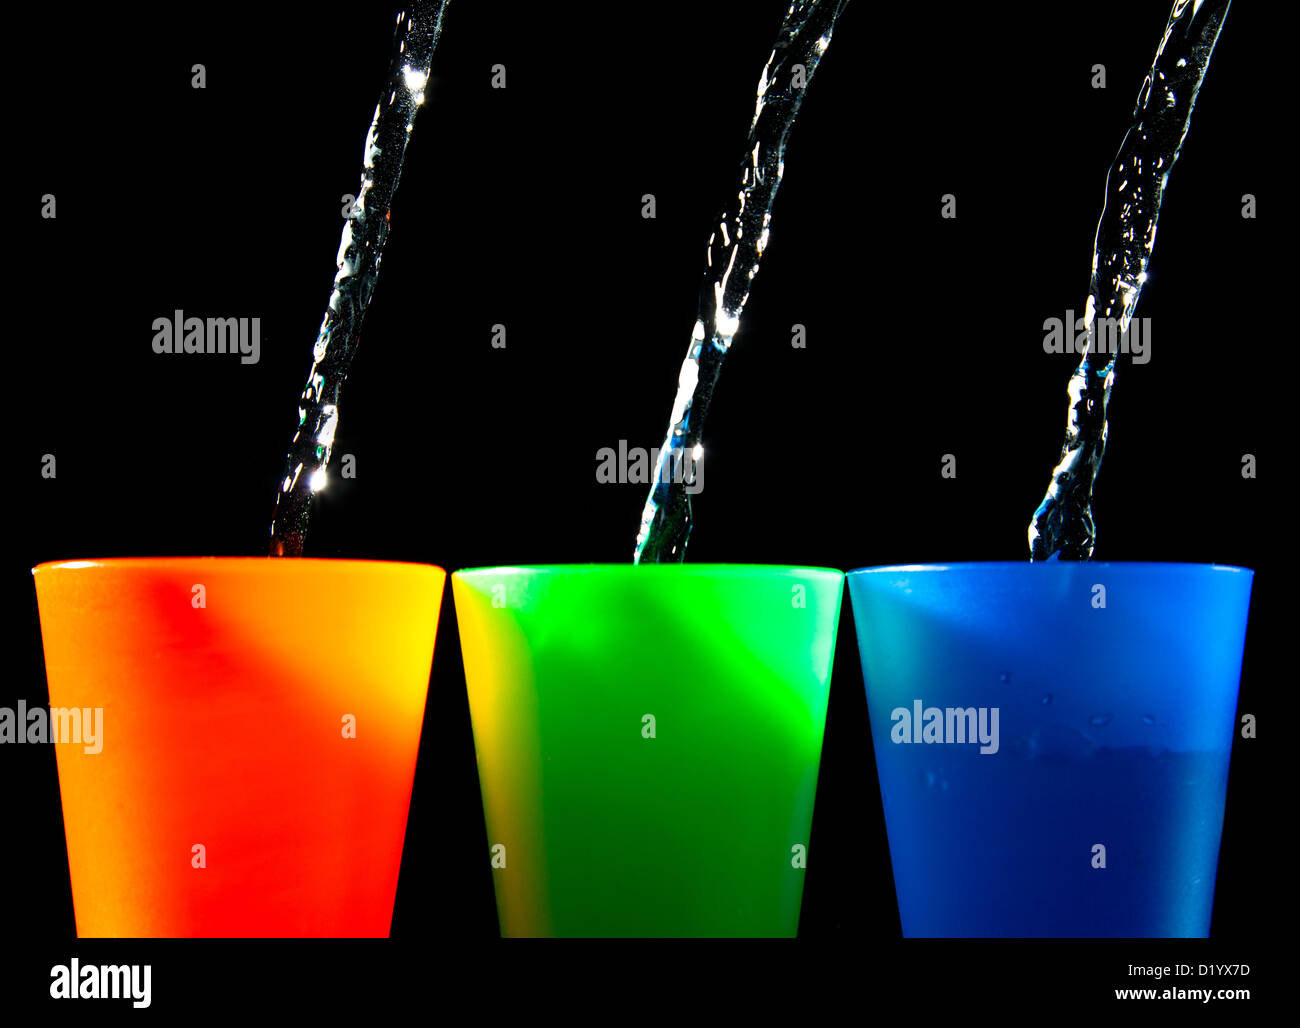 Three Children's multicolored plastic cups with splashes Stock Photo